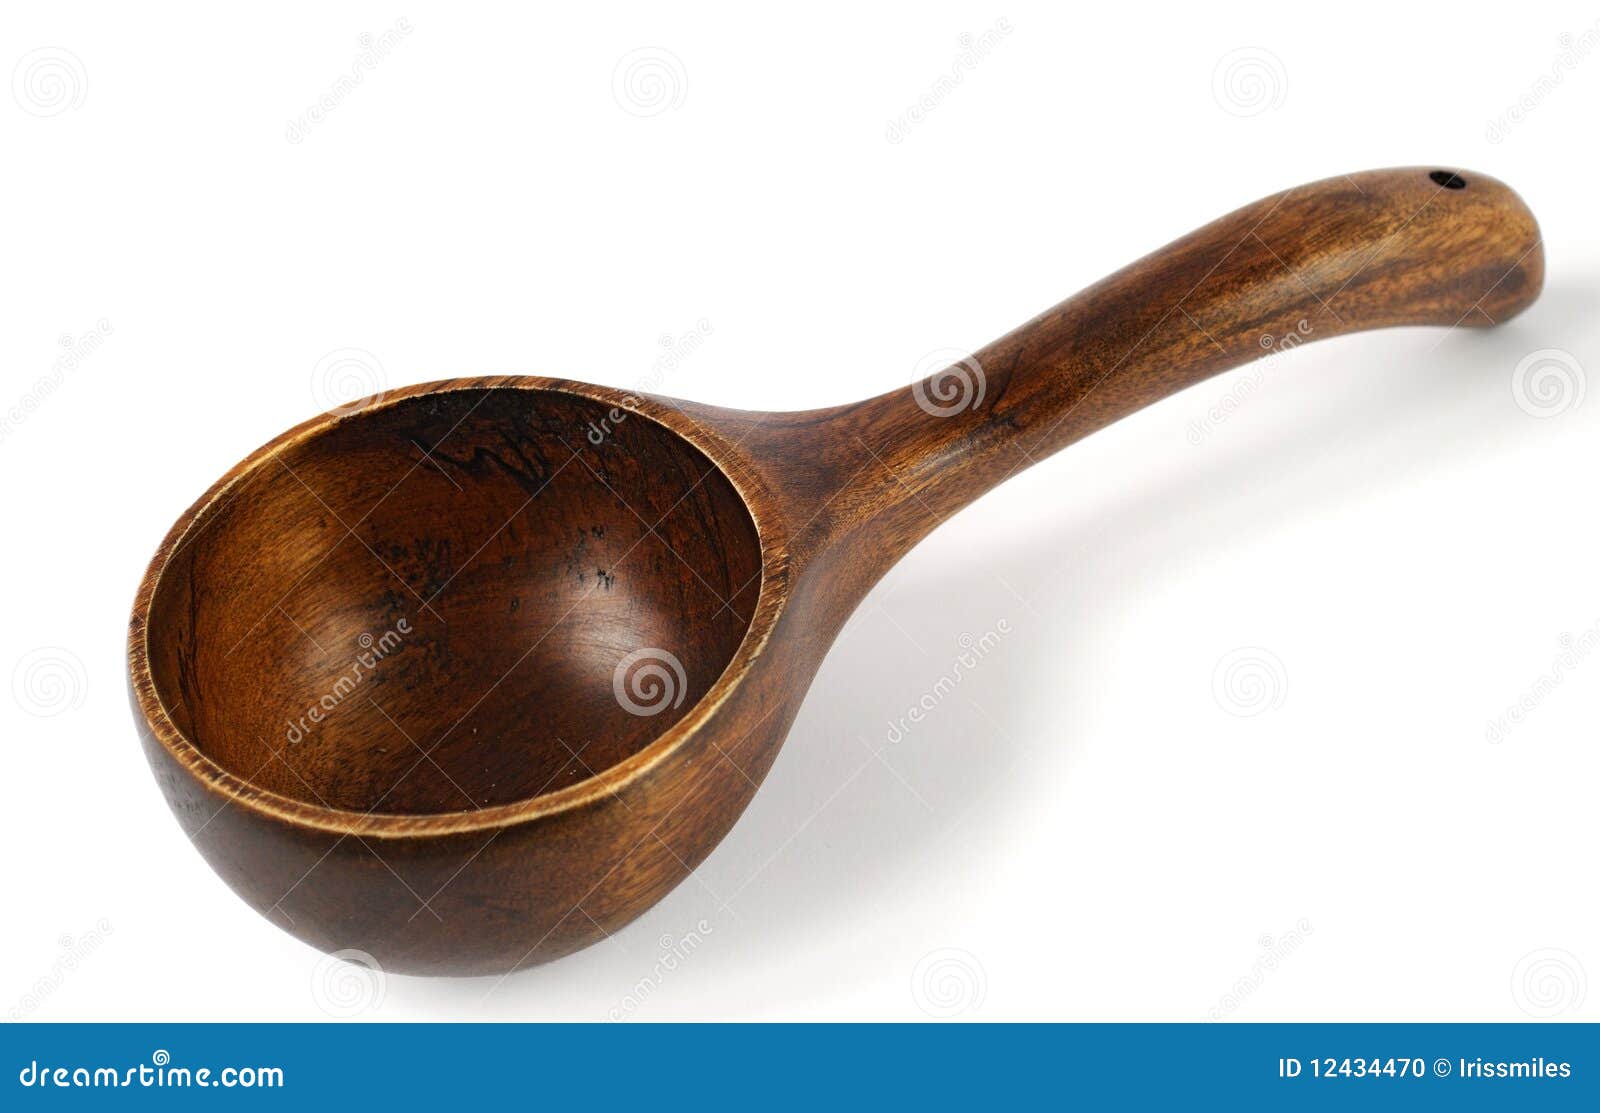 Big wooden spoon stock photo. Image of dark, cook, kitchen - 12434470